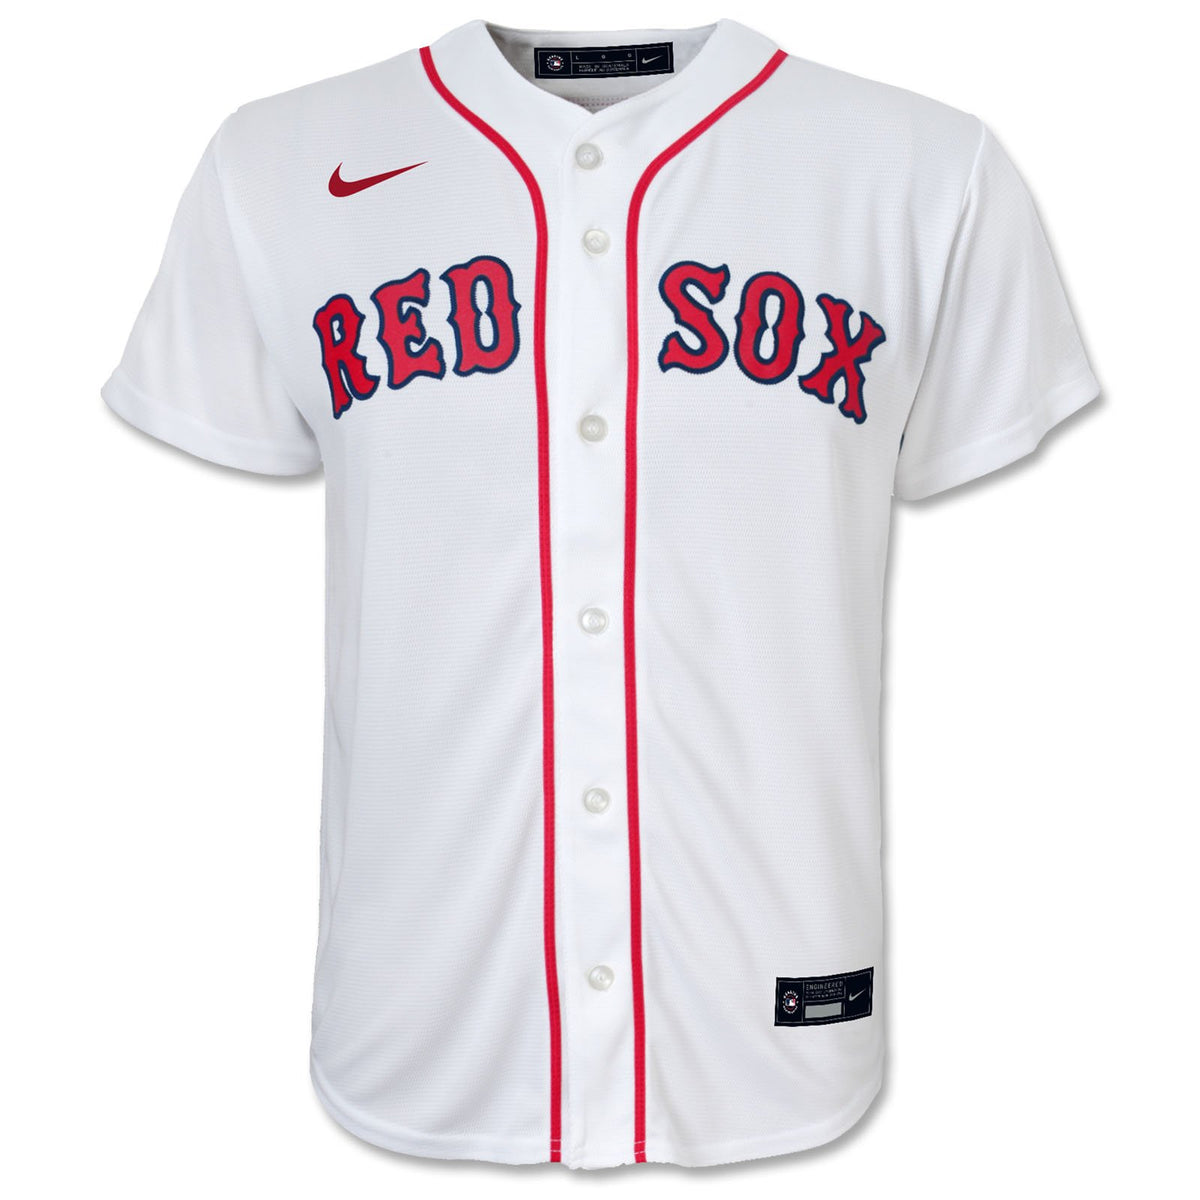 Themed Jersey - Boston Red Sox Nike Jersey - legit nike sb size